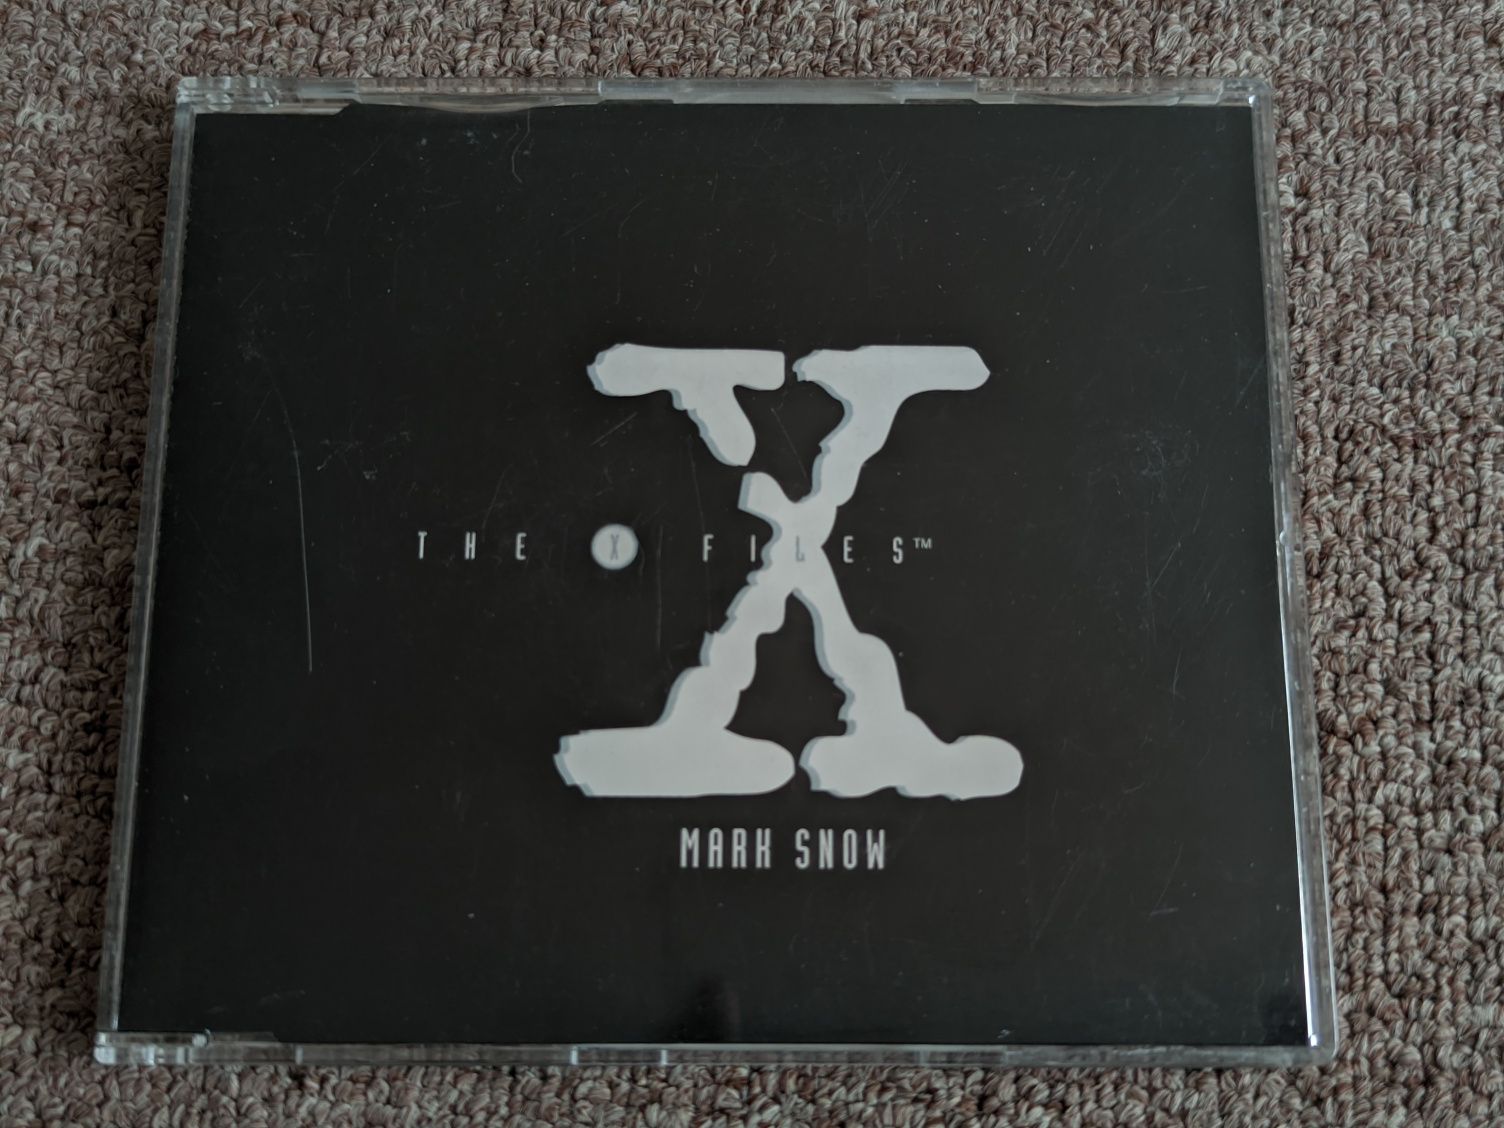 Фирменный диск The X files Mark Snow